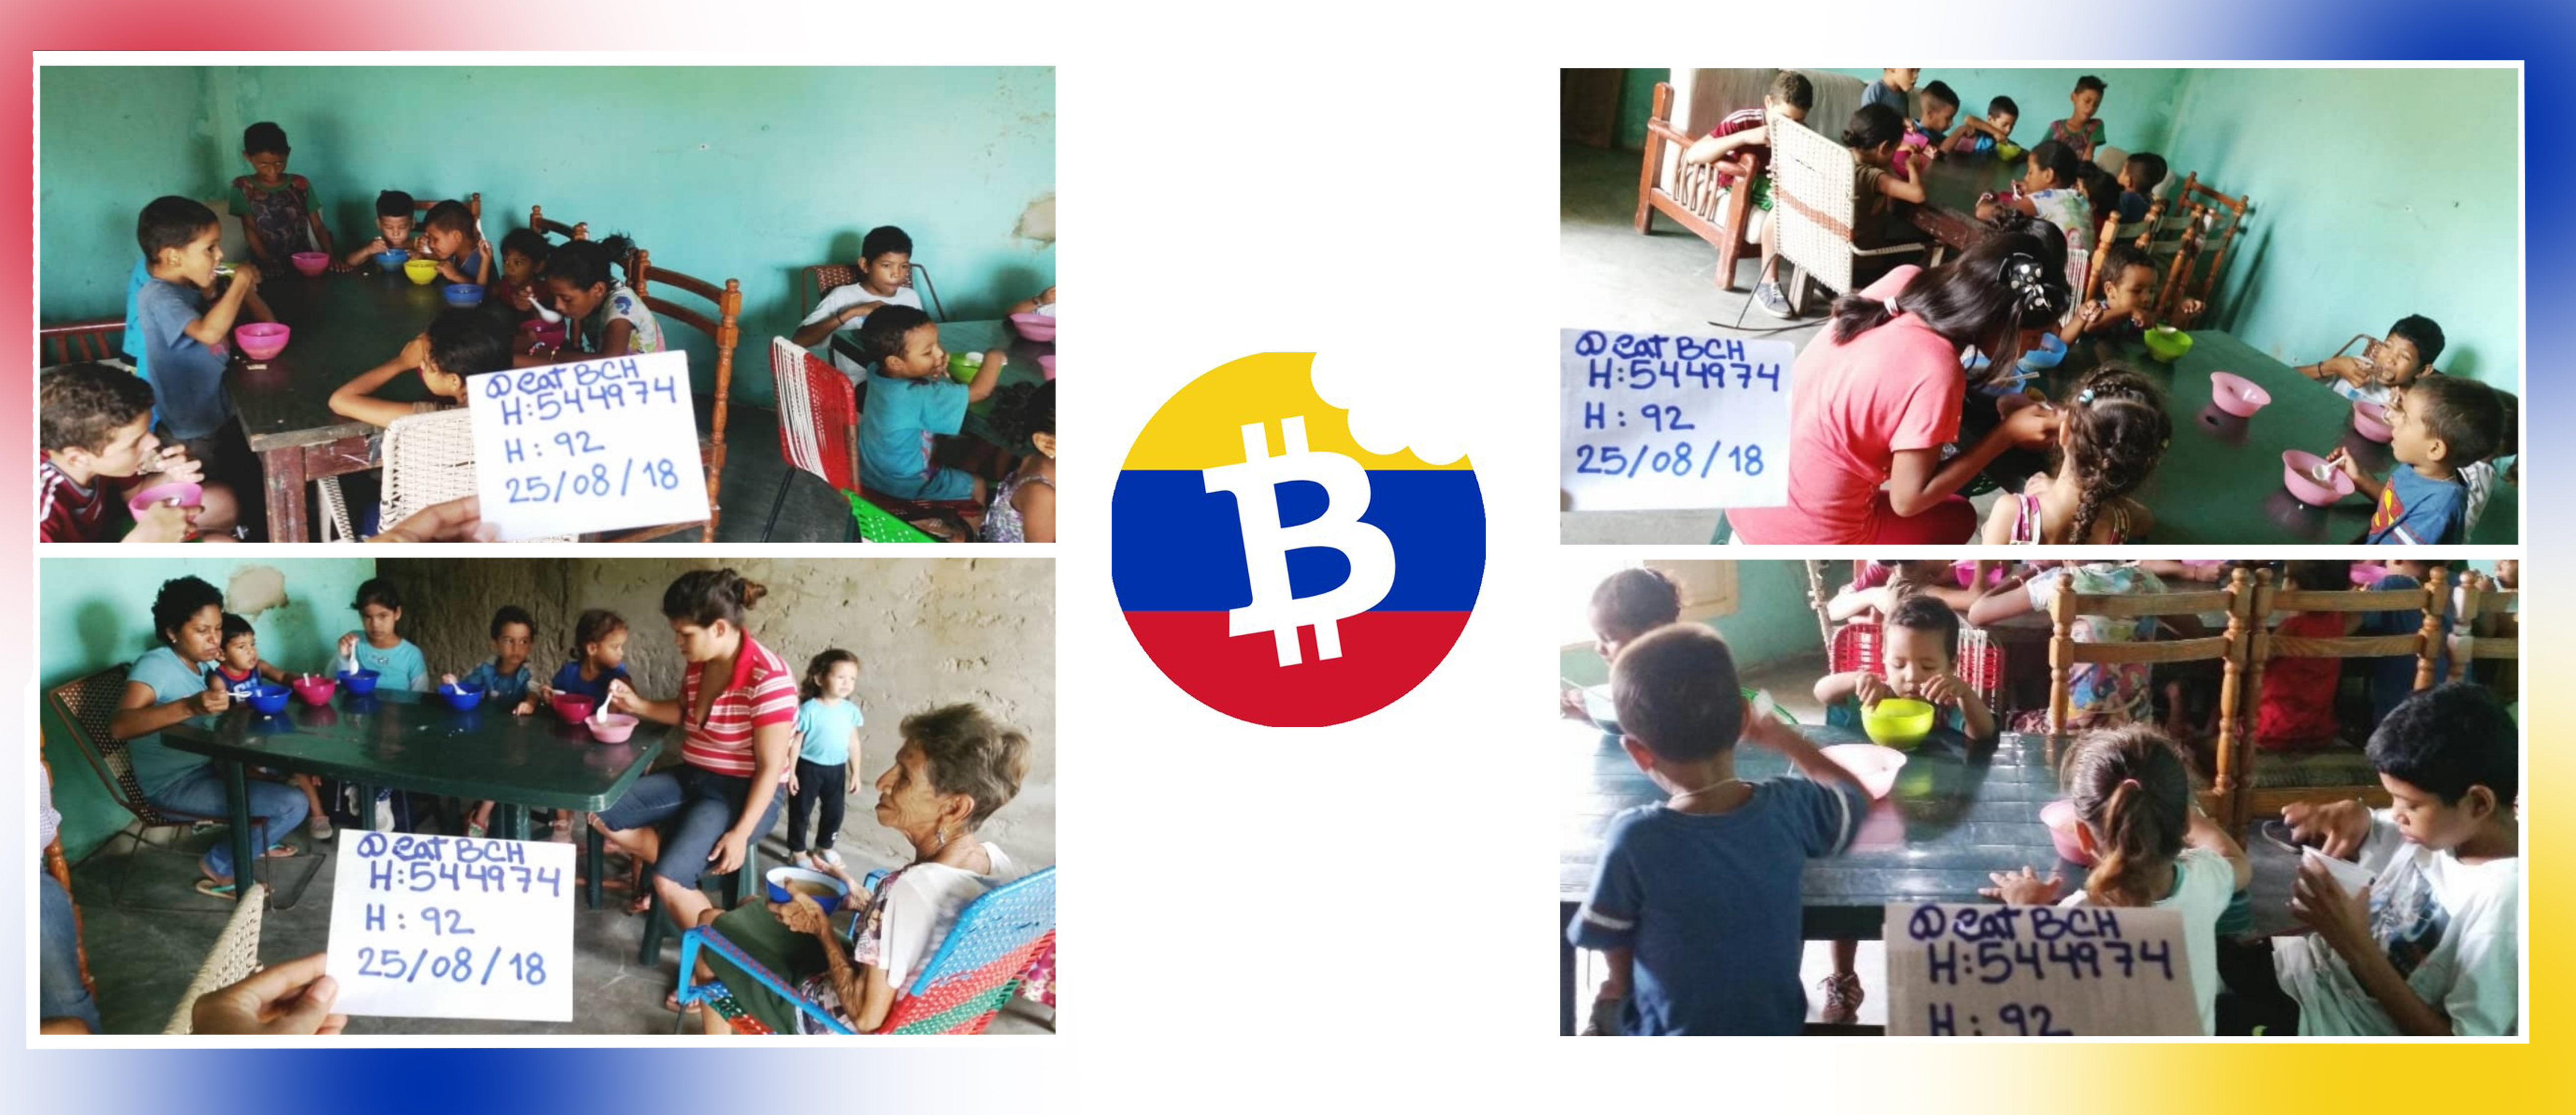 Venezuelan Nonprofit Eatbch Celebrates First Anniversary Amidst Hyperinflation